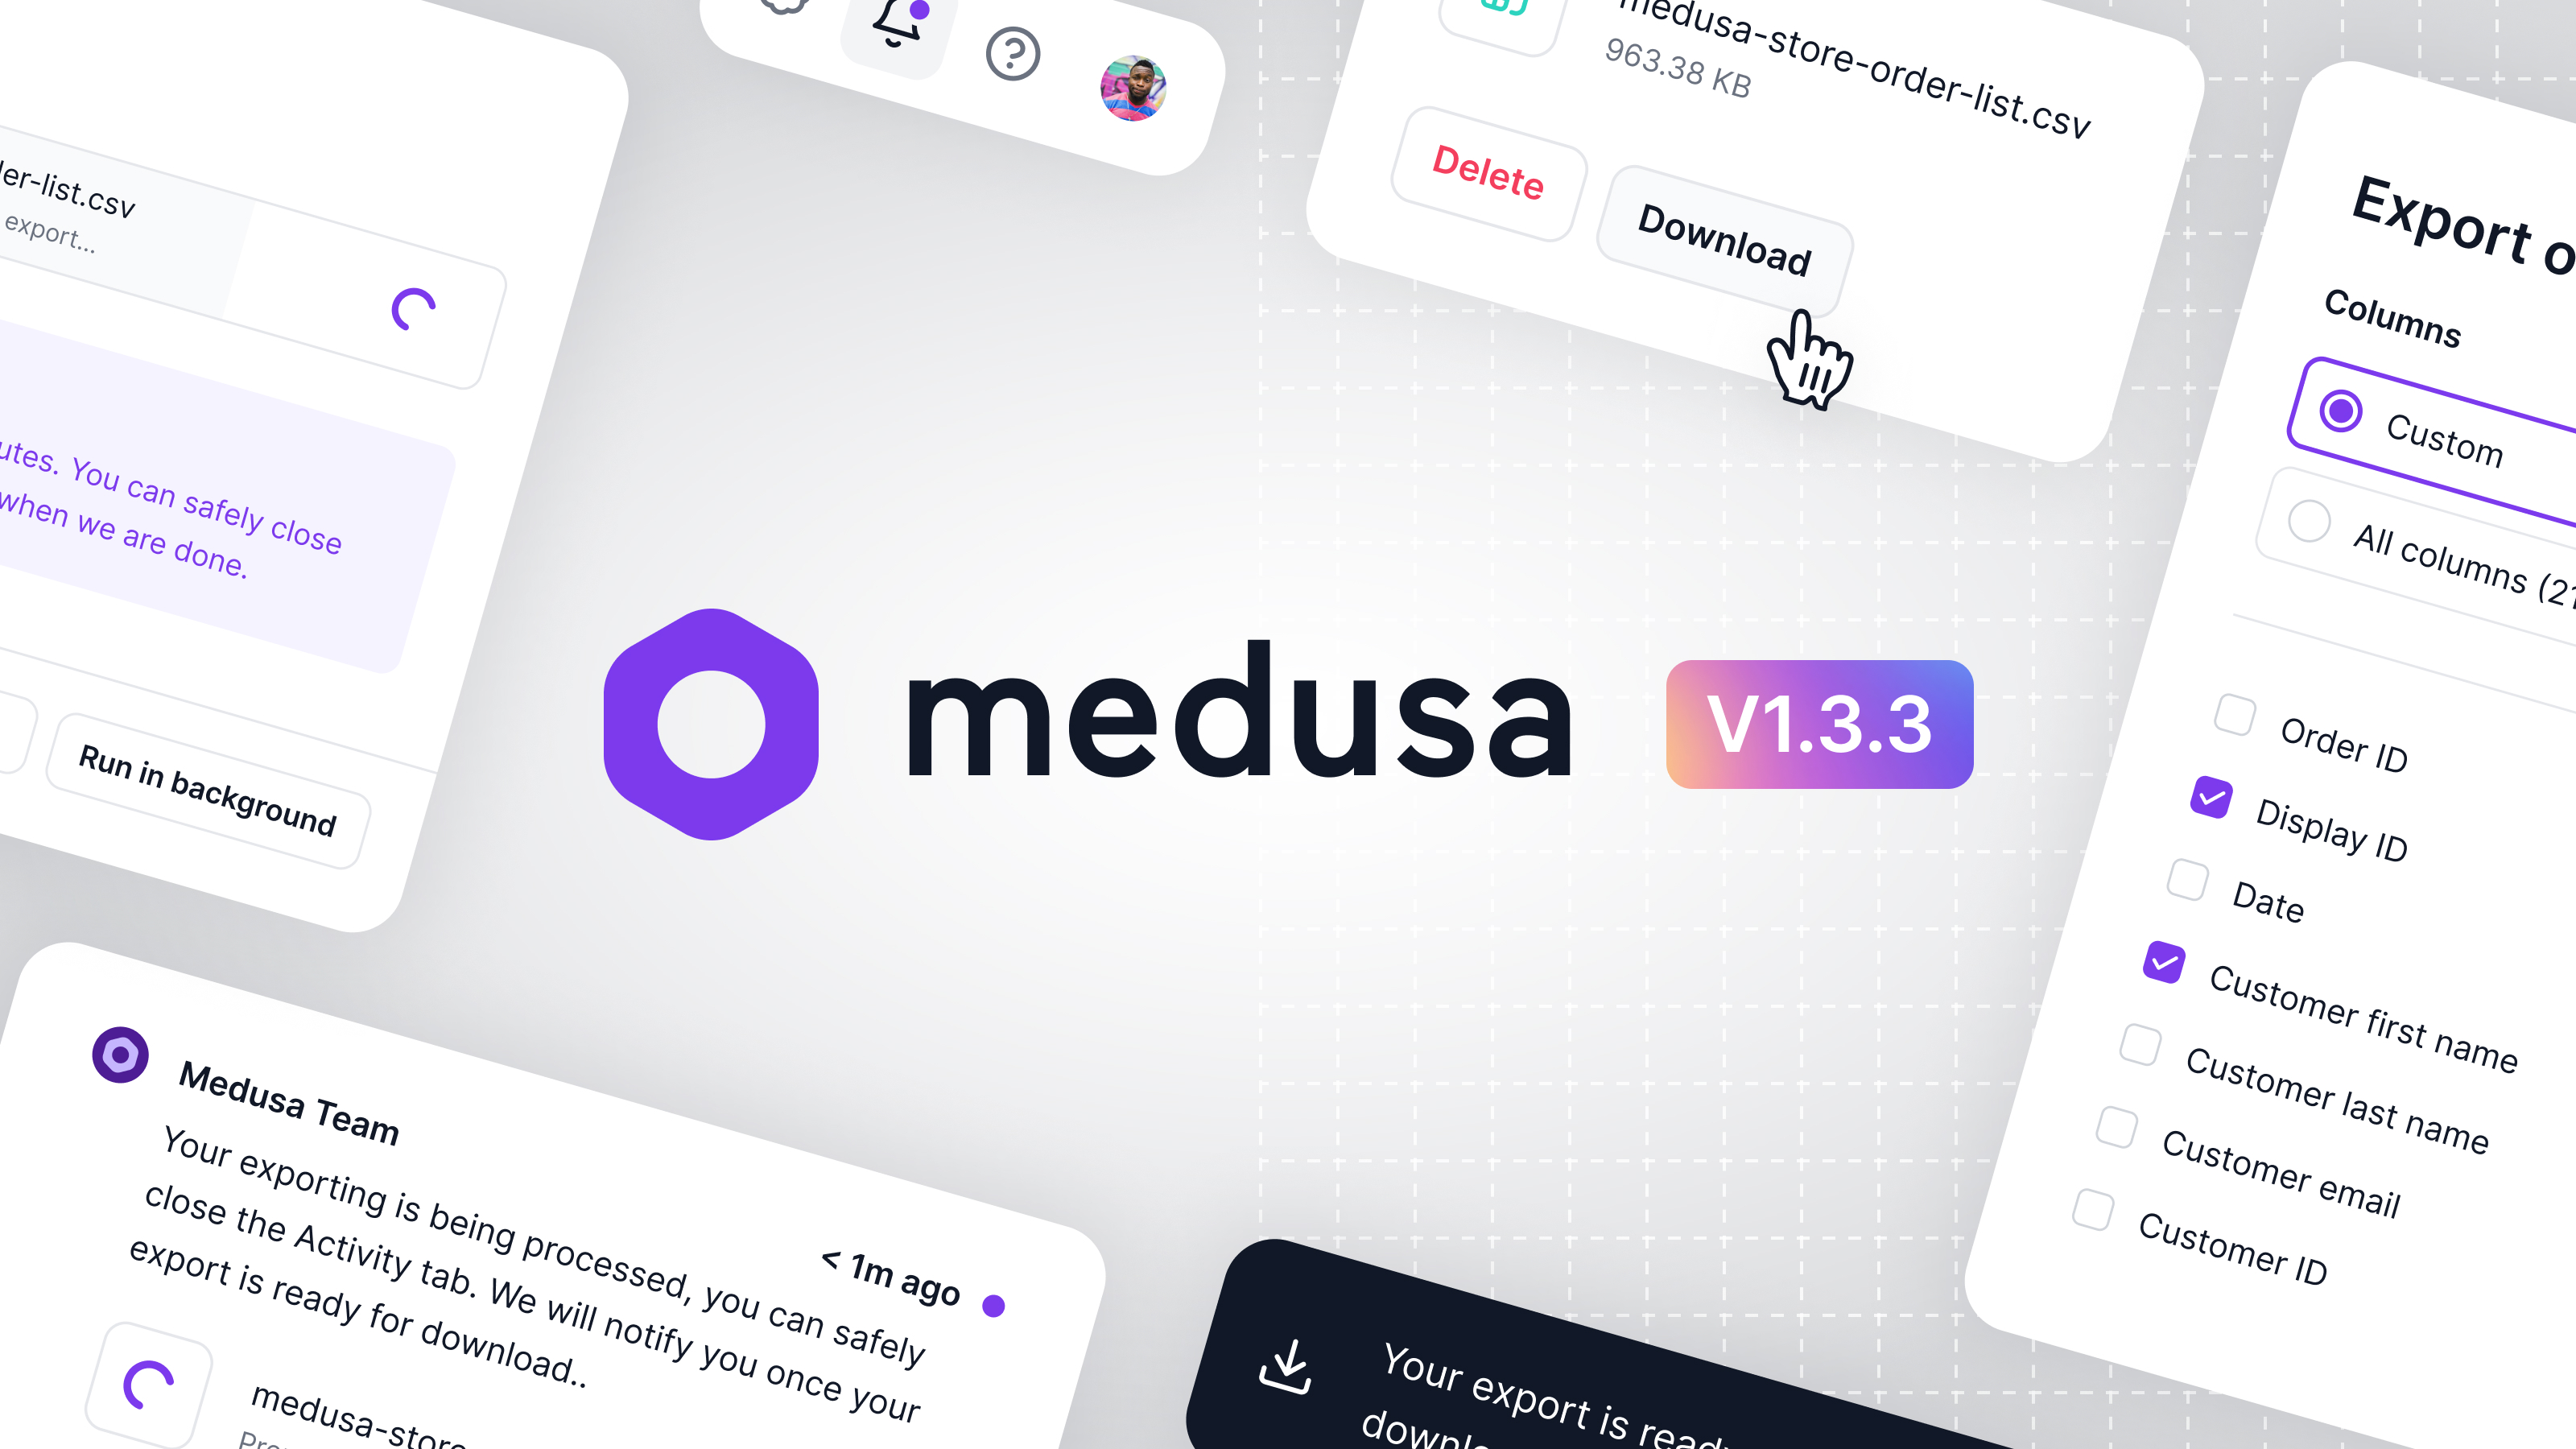 Medusa v1.3.3: BatchJob API, Advanced Next.js Storefront, Feature Flags, and More!